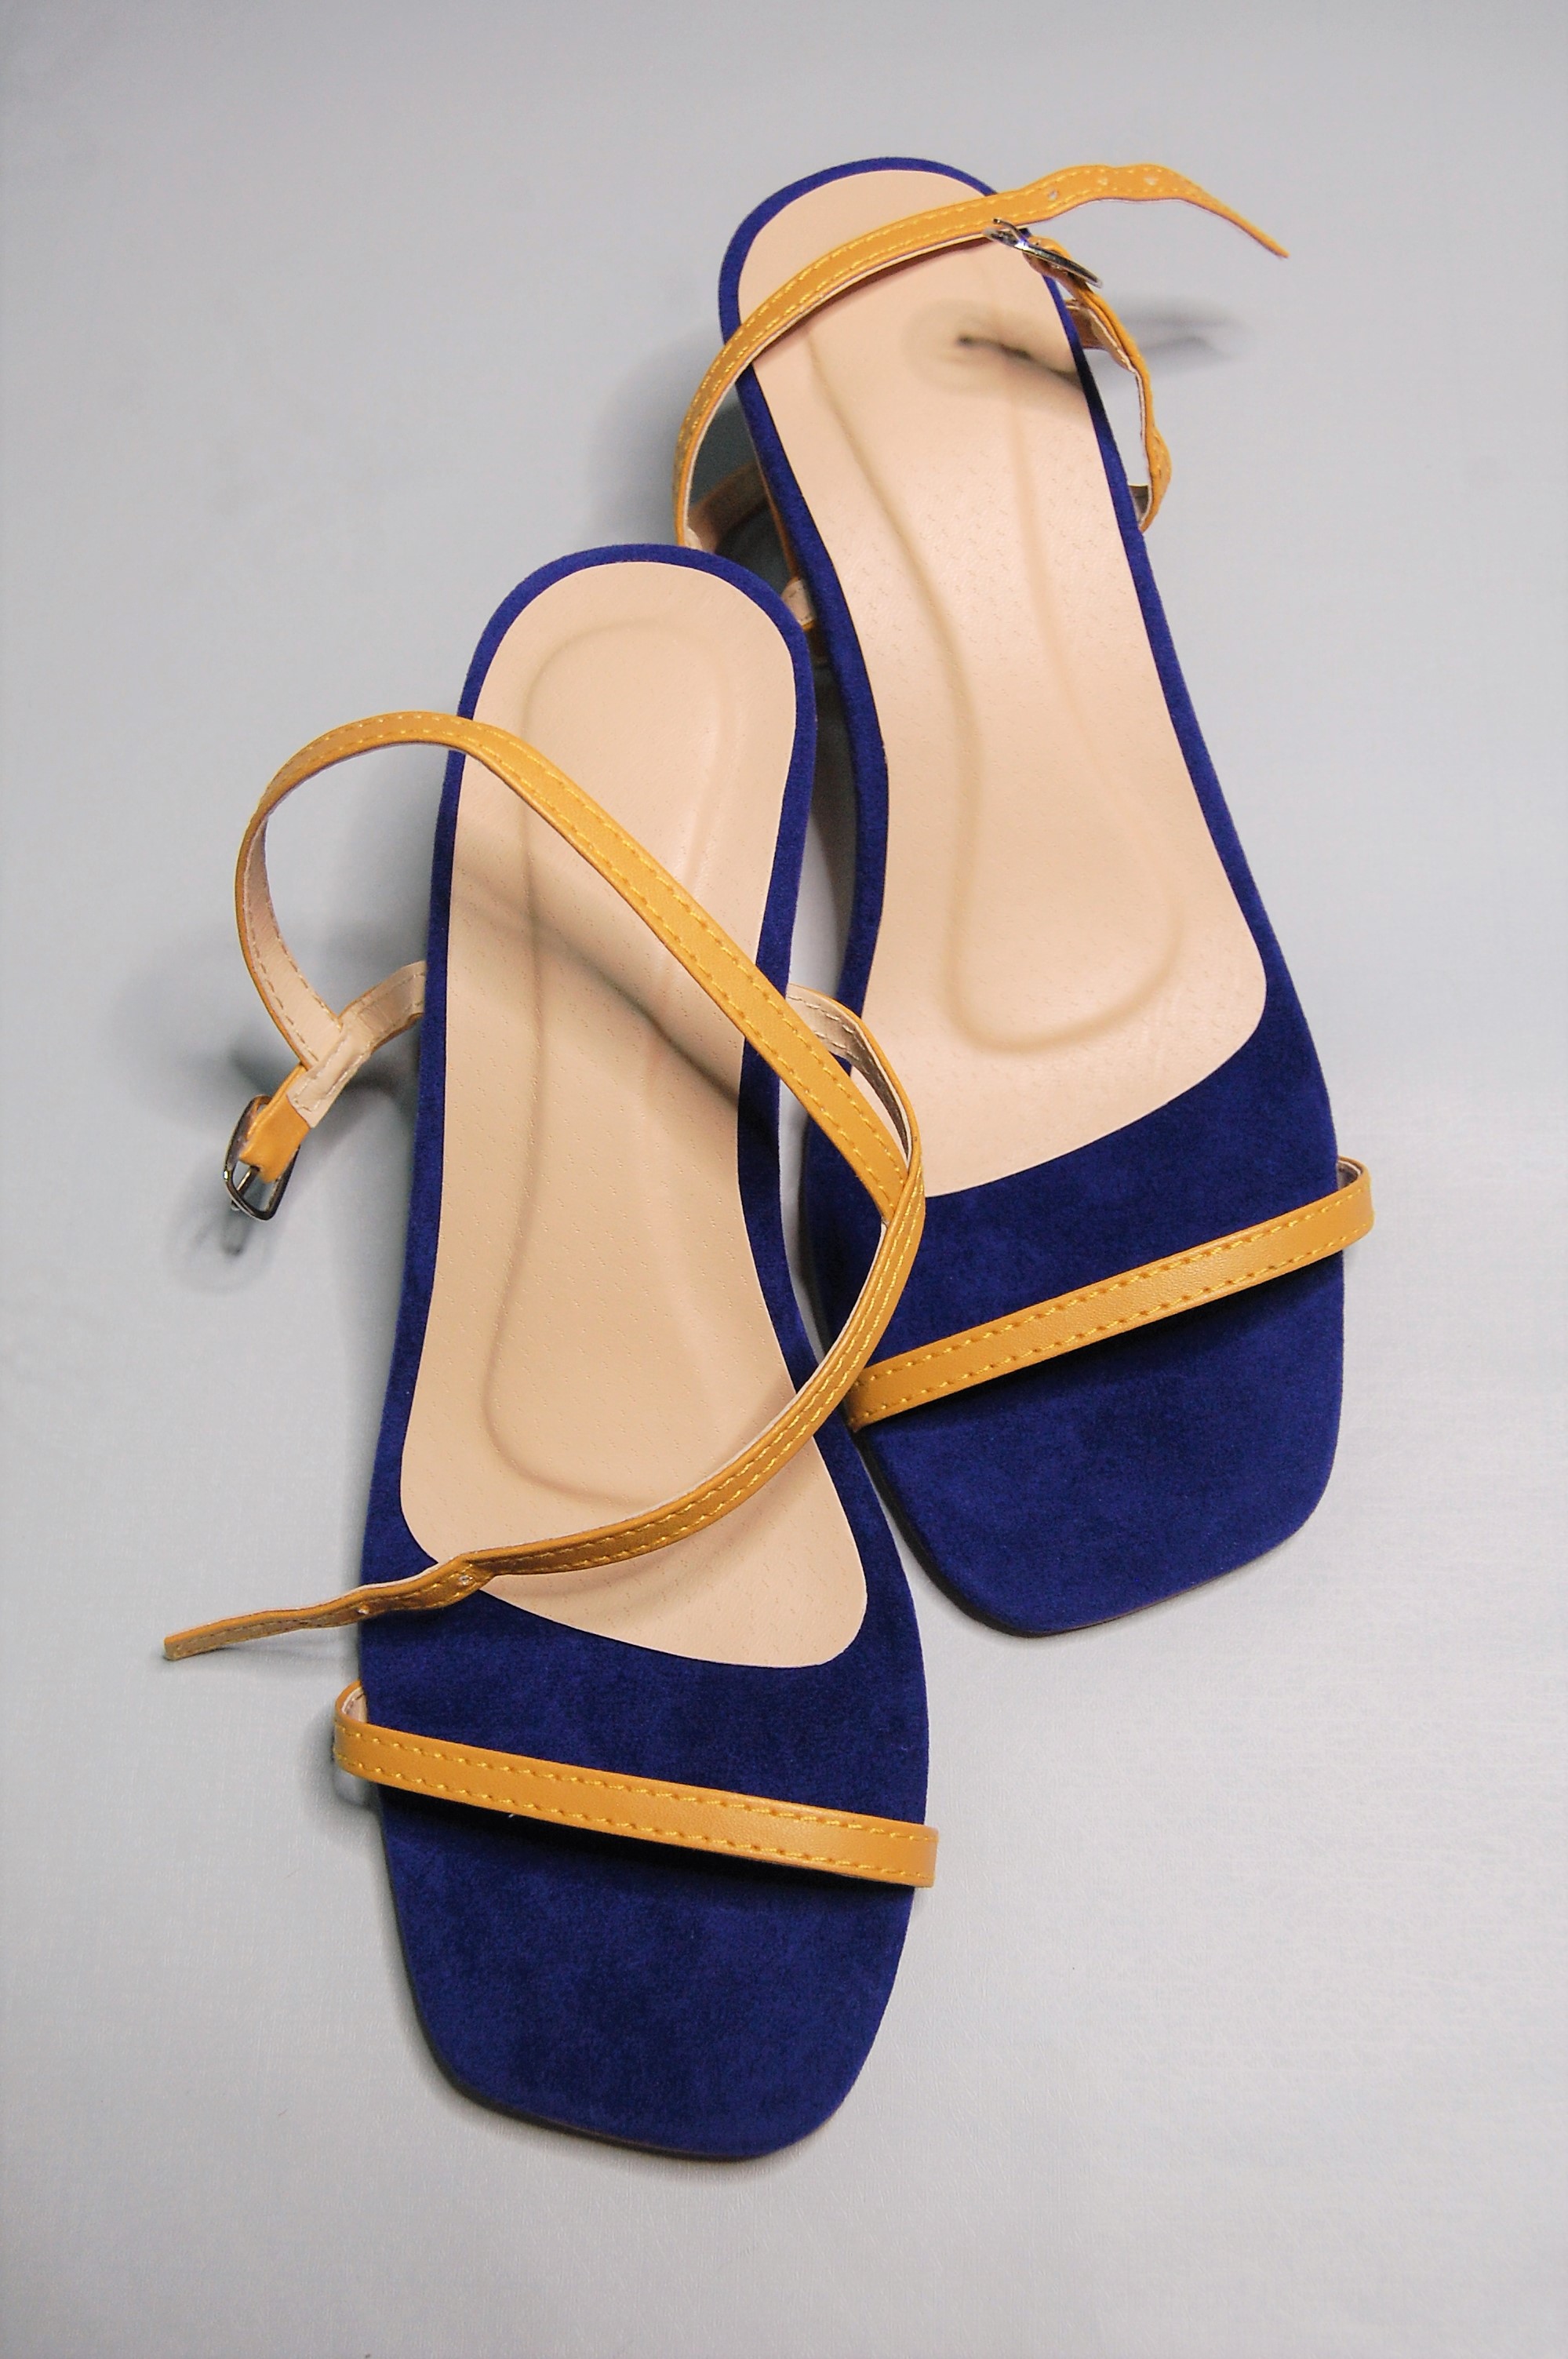 2 inch yellow heels